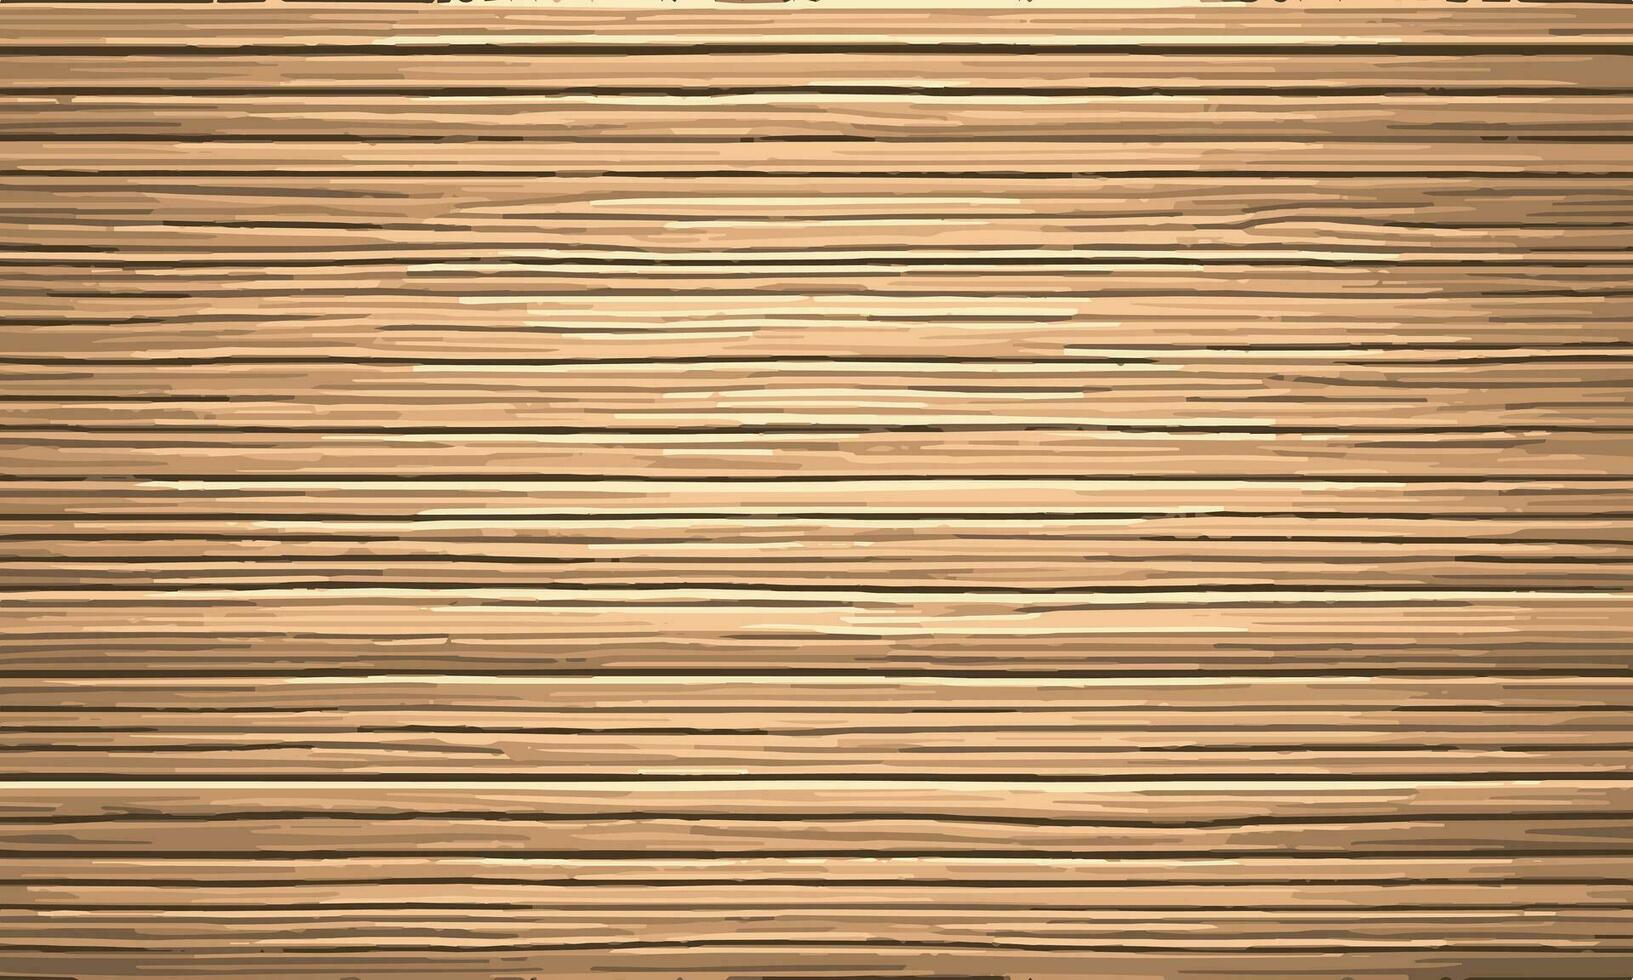 Wooden wall vector illustration background. wooden closeup texture vector